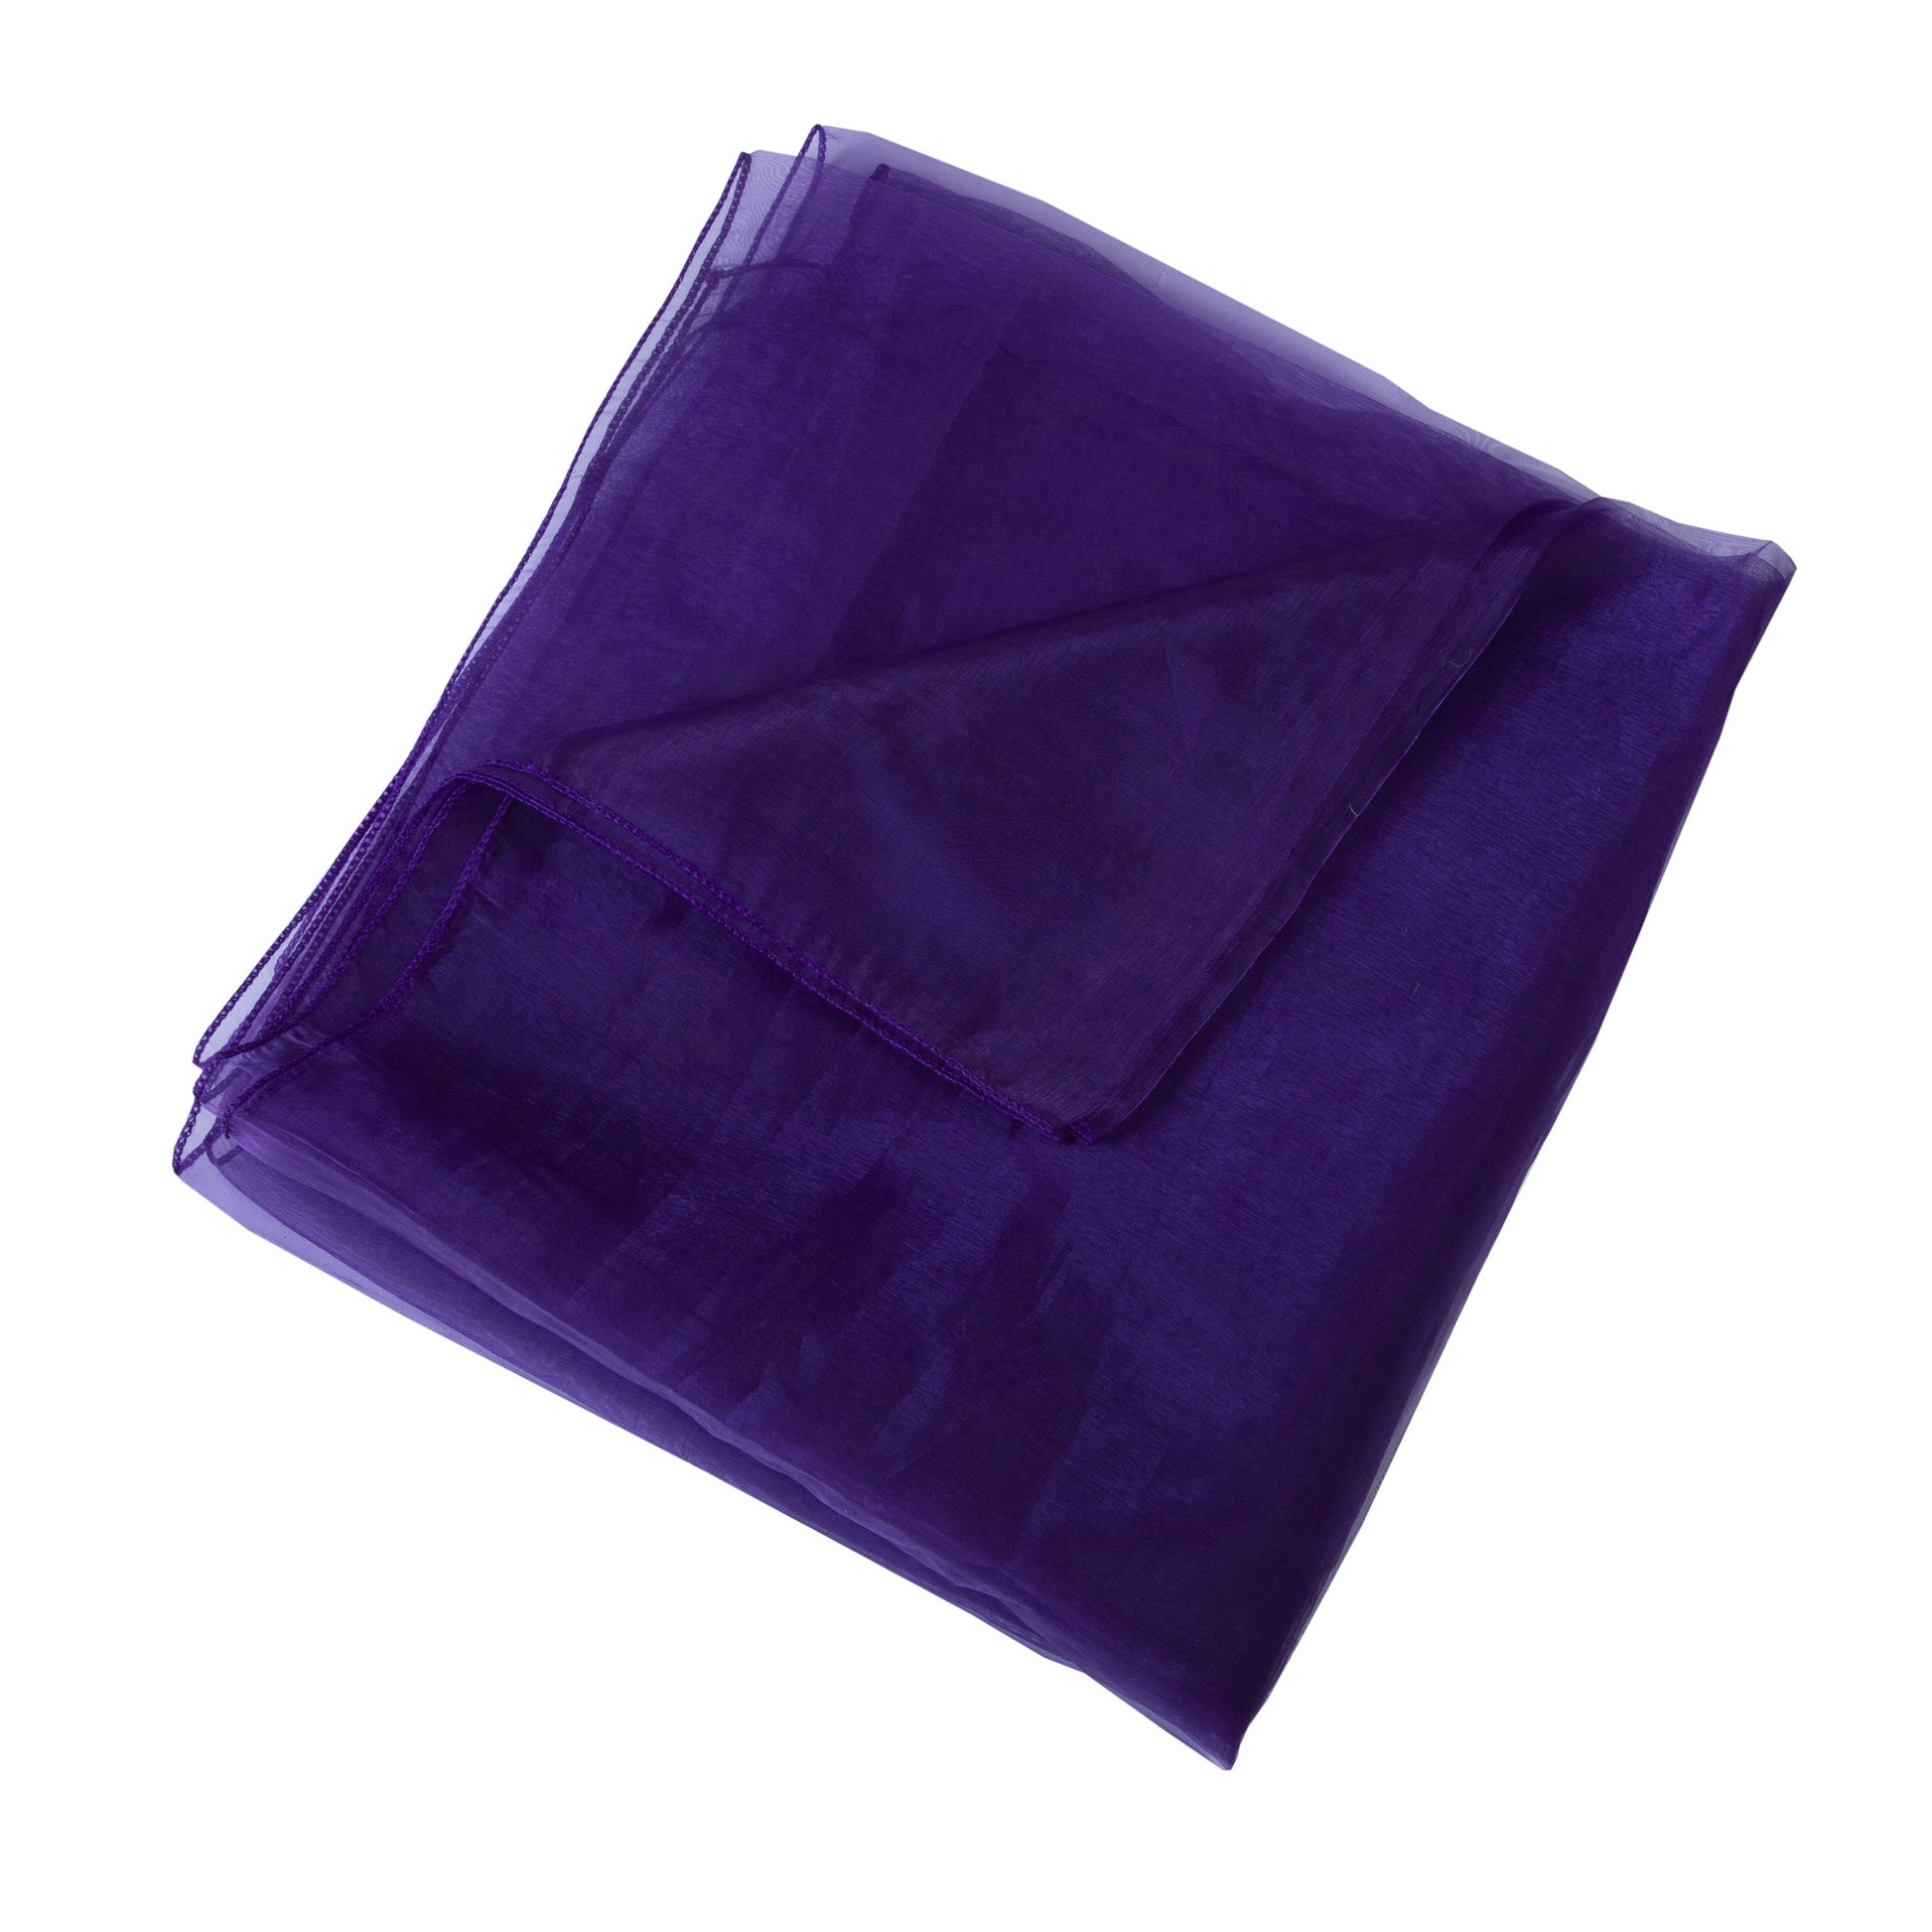 Cadbury Purple,569486a2-84ce-4e02-bcdd-3383fc76a9d8